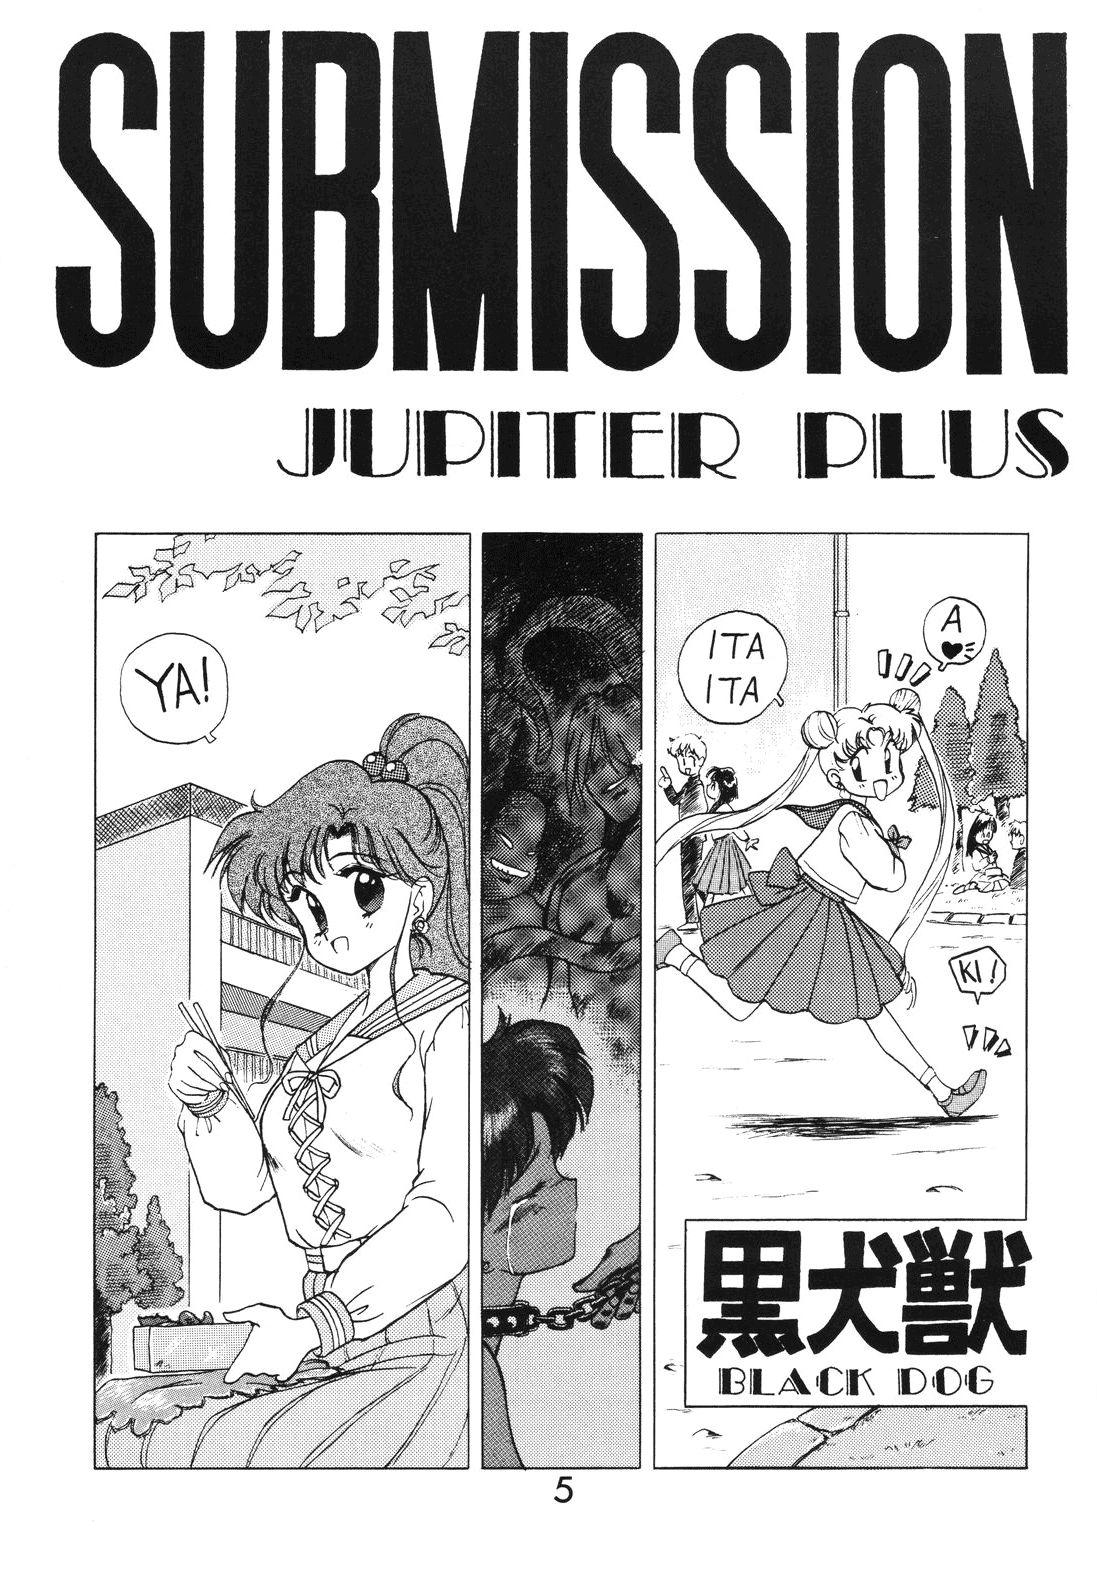 Legs SUBMISSION JUPITER PLUS - Sailor moon Curious - Page 5